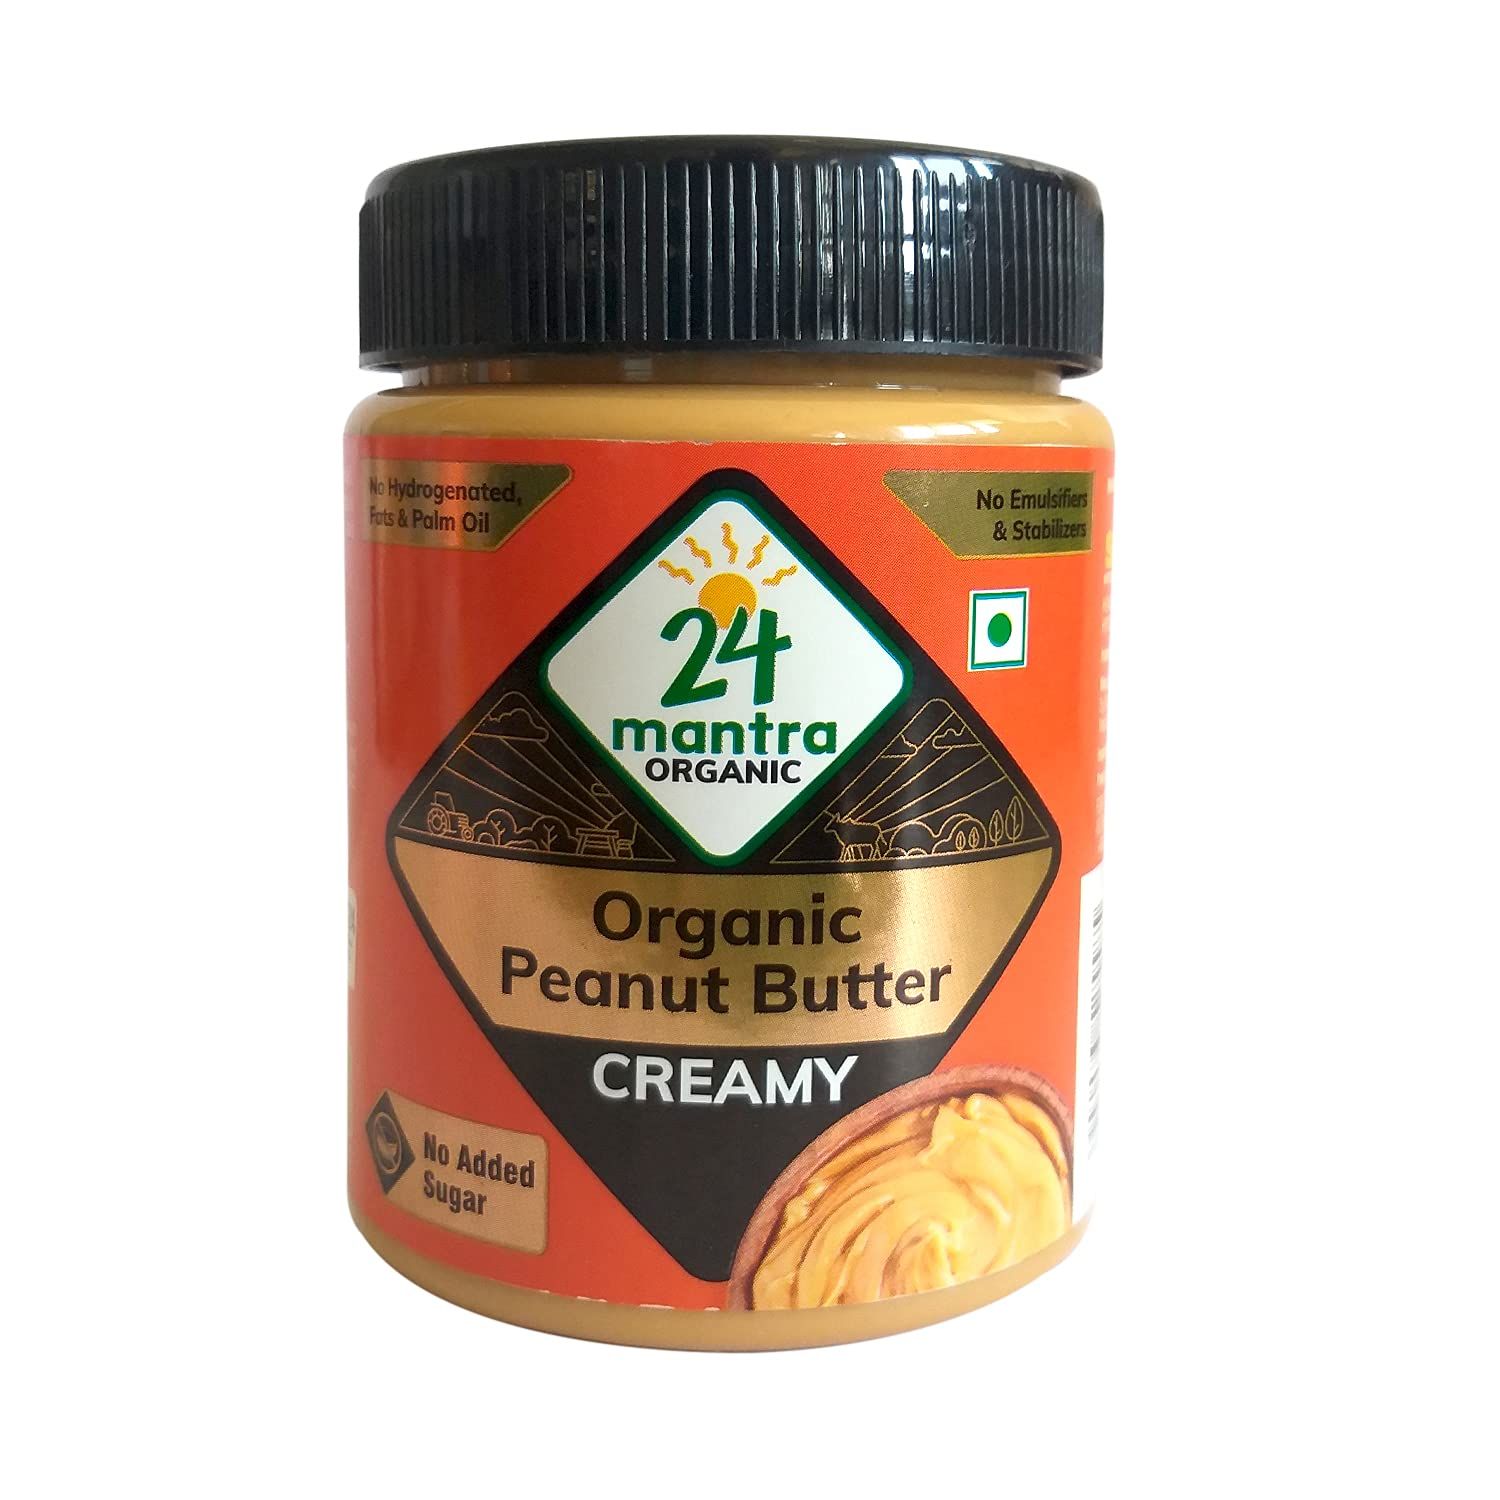 24 Mantra Organic Peanut Butter Image